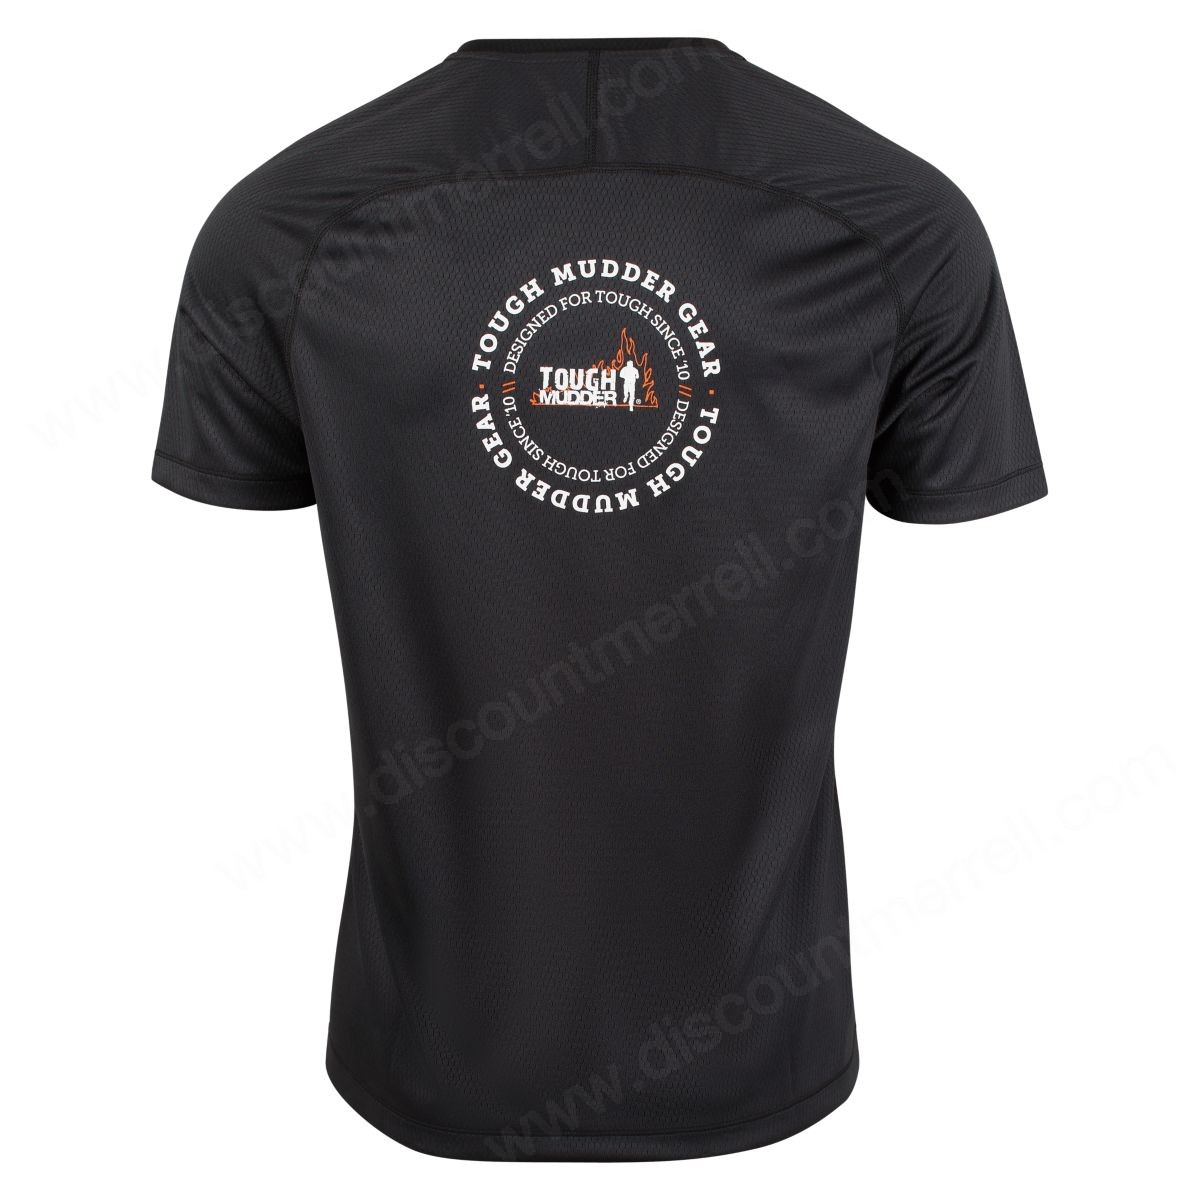 Merrell Man's Tough Mudder Fastrex Short Sleeve Tech Tshirts Black/white - -1